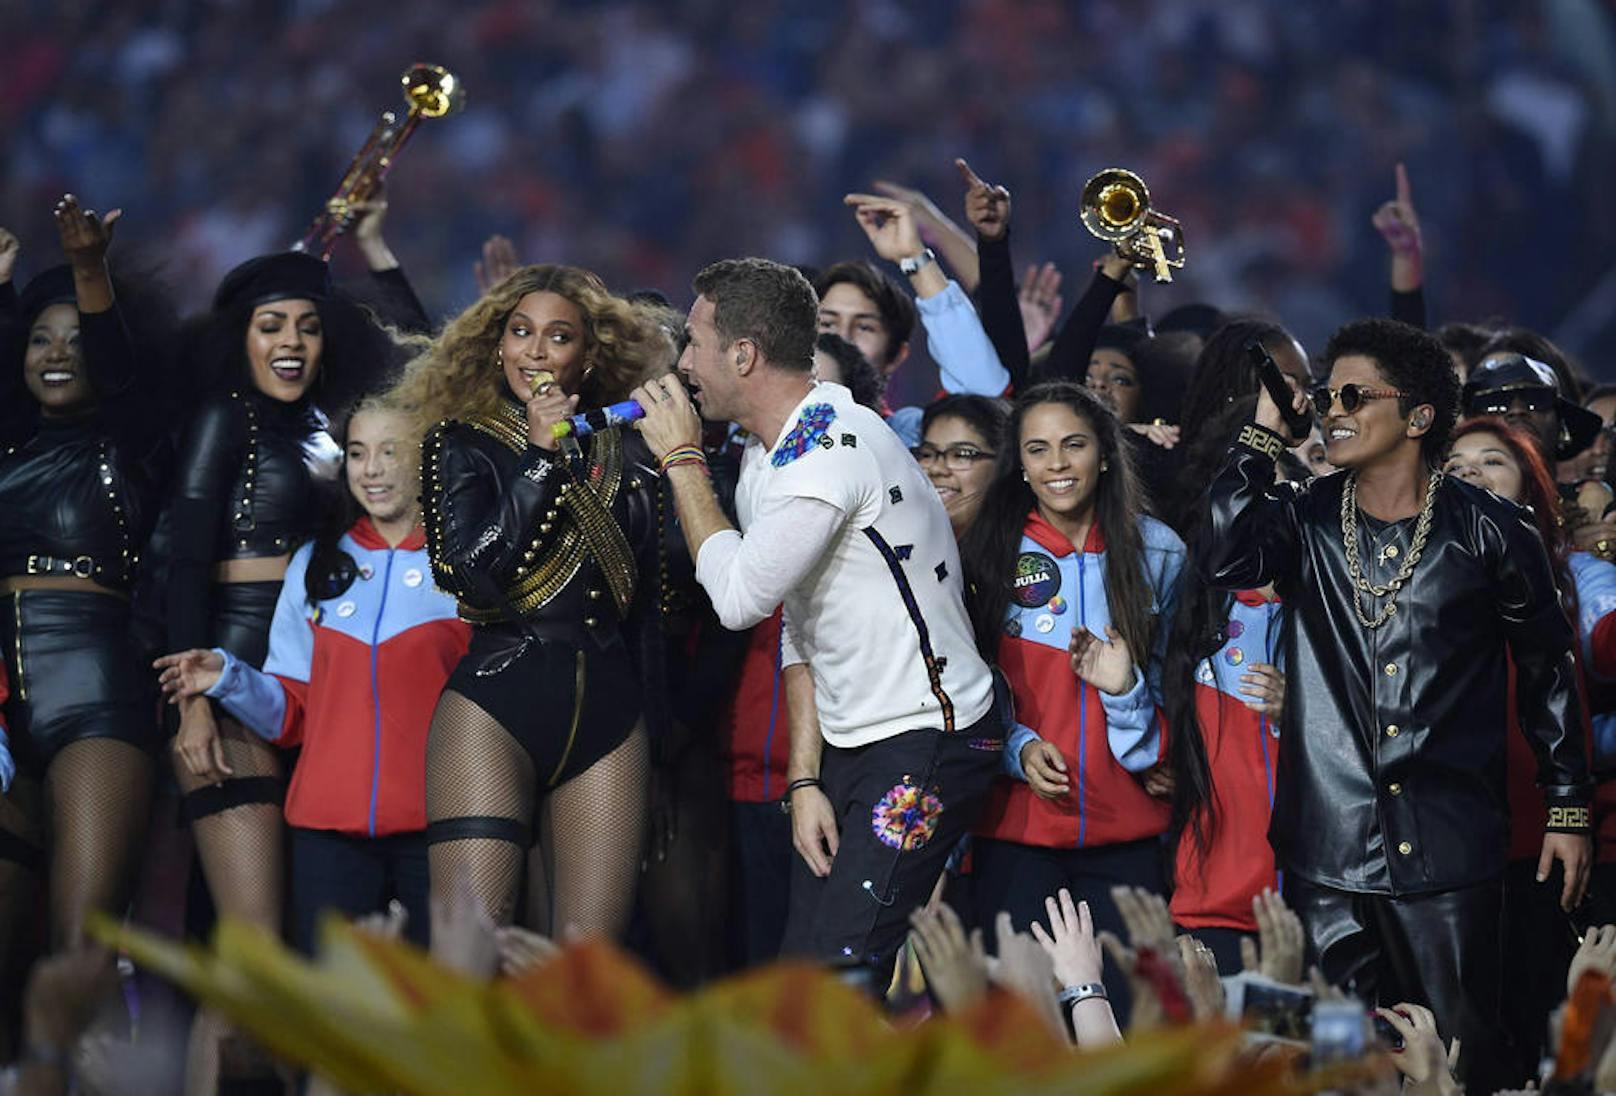 Beyoncé stohl Bruno Mars und Coldplay gehörig die Show beim Super Bowl